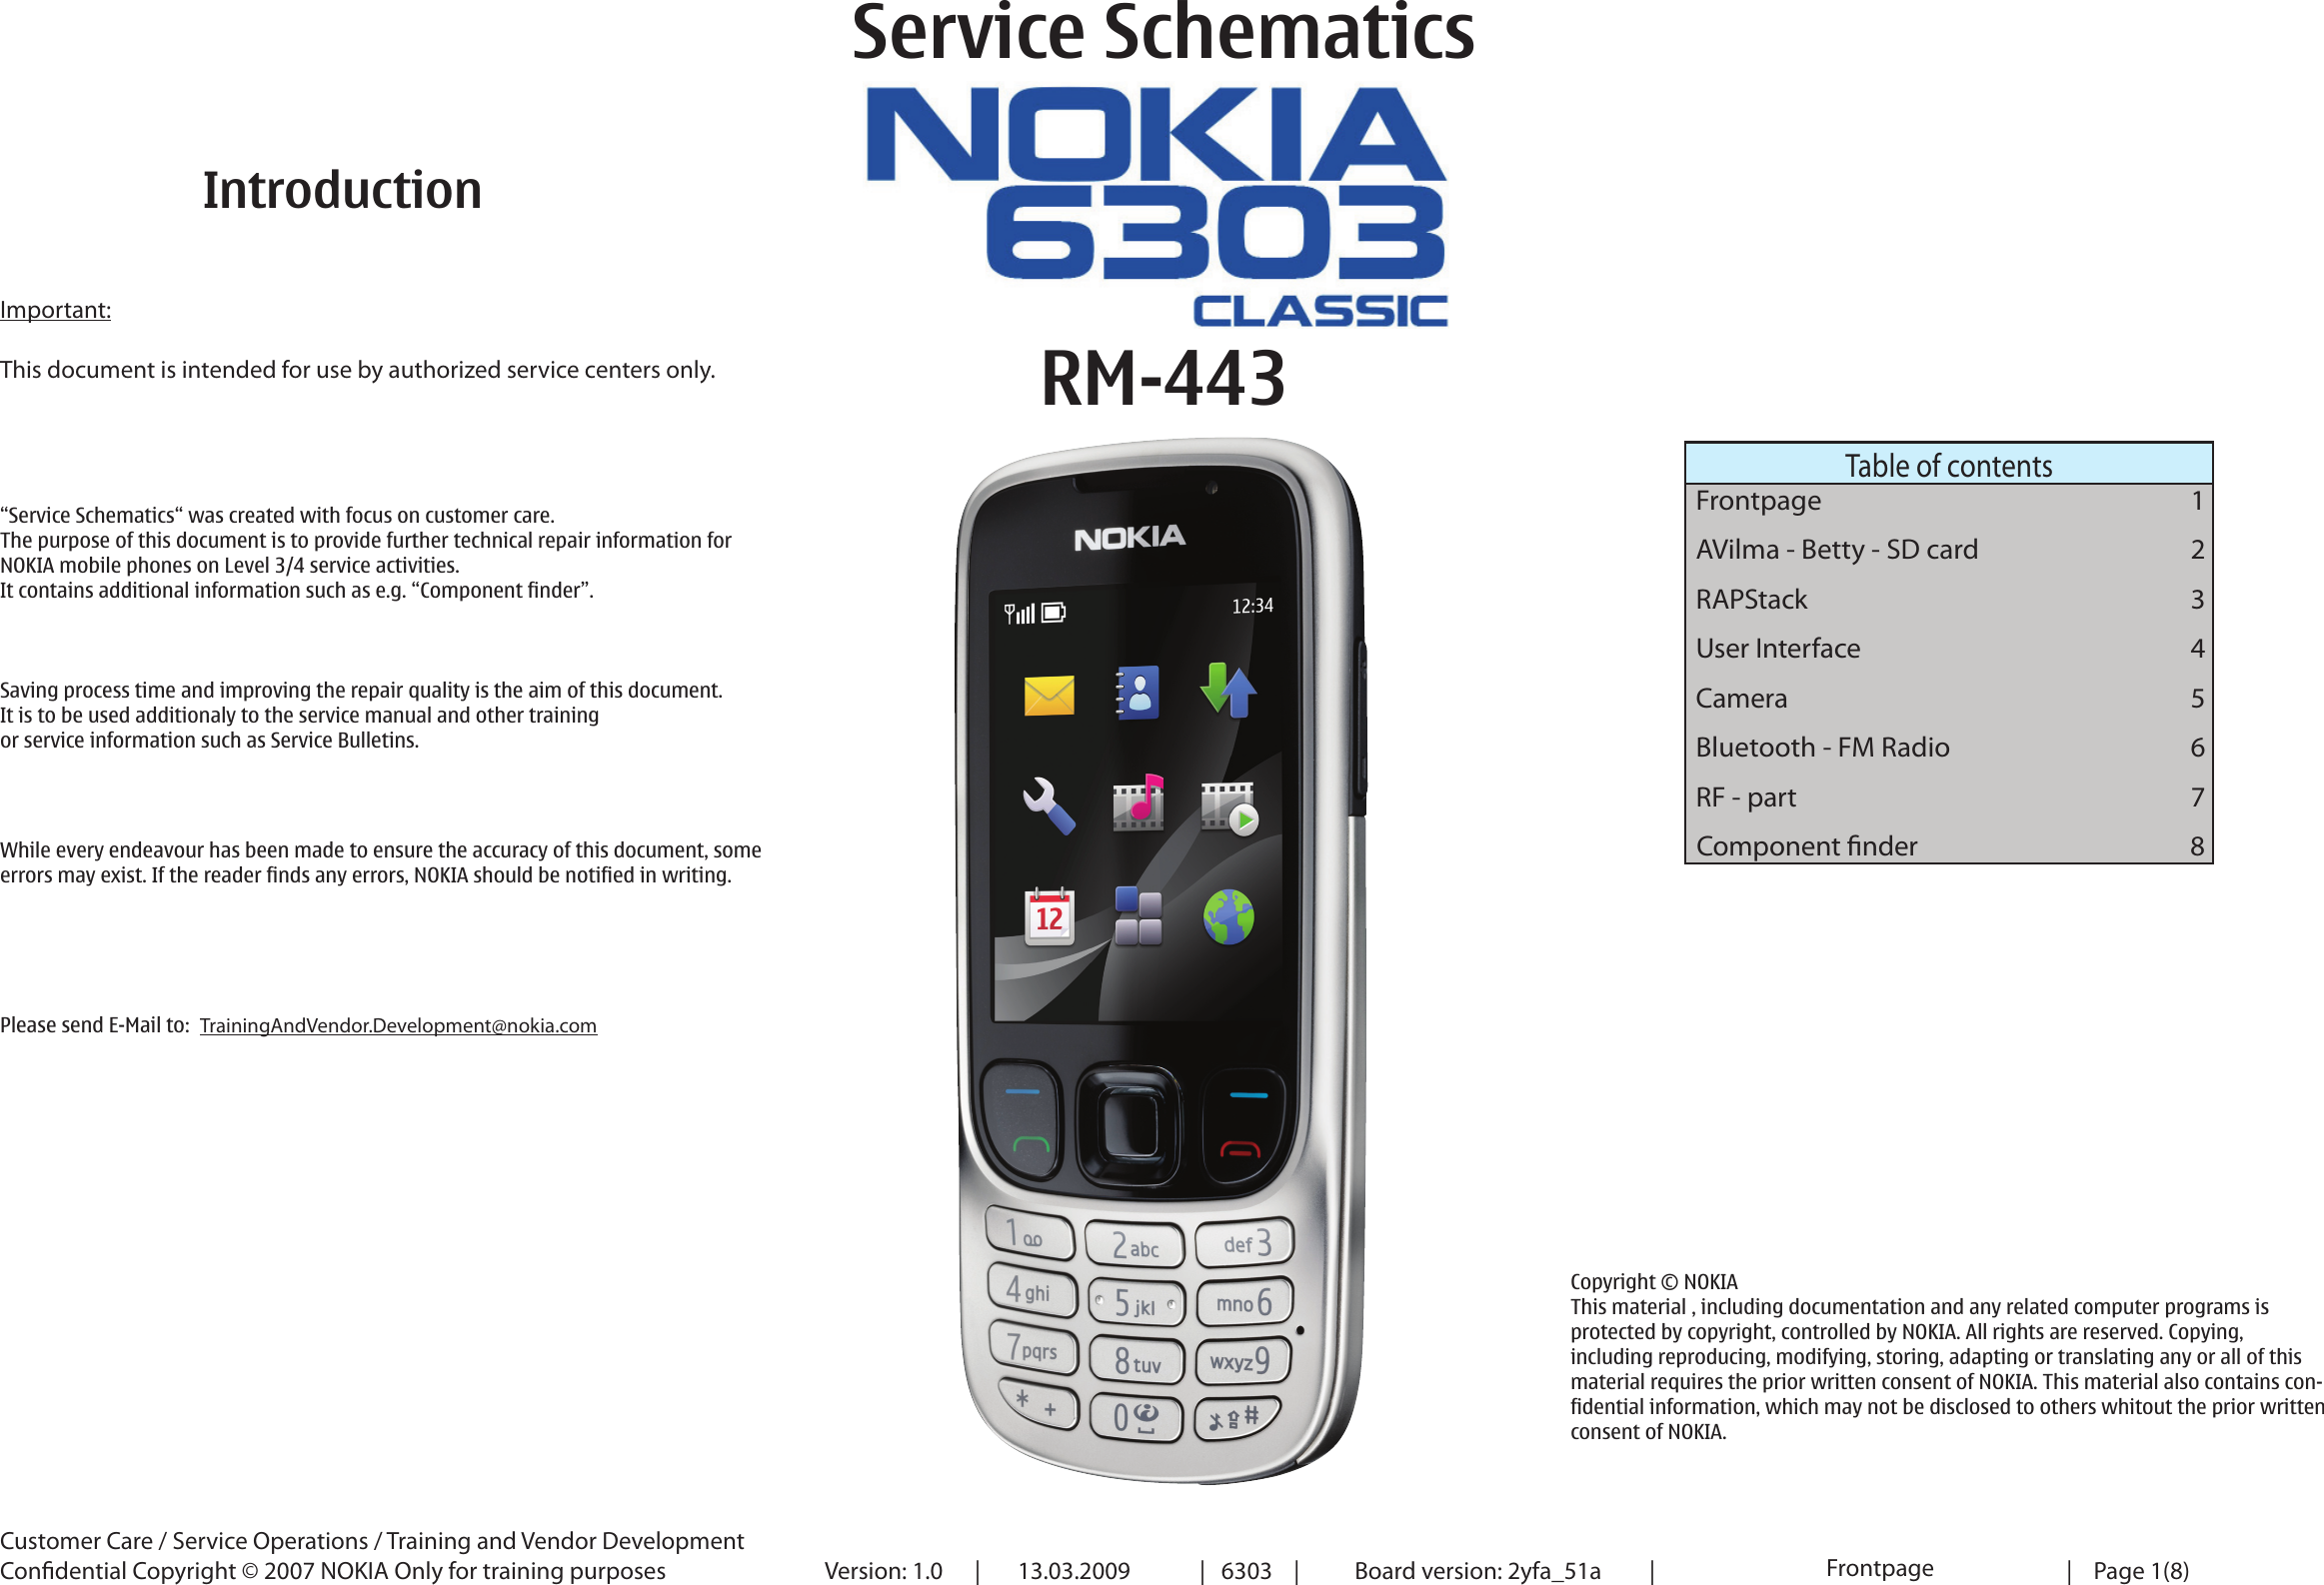 Page 1 of 9 - Nokia 6303 Classic RM-443 - Service Schematics. Www.s-manuals.com. 6303c Schematics V1.0